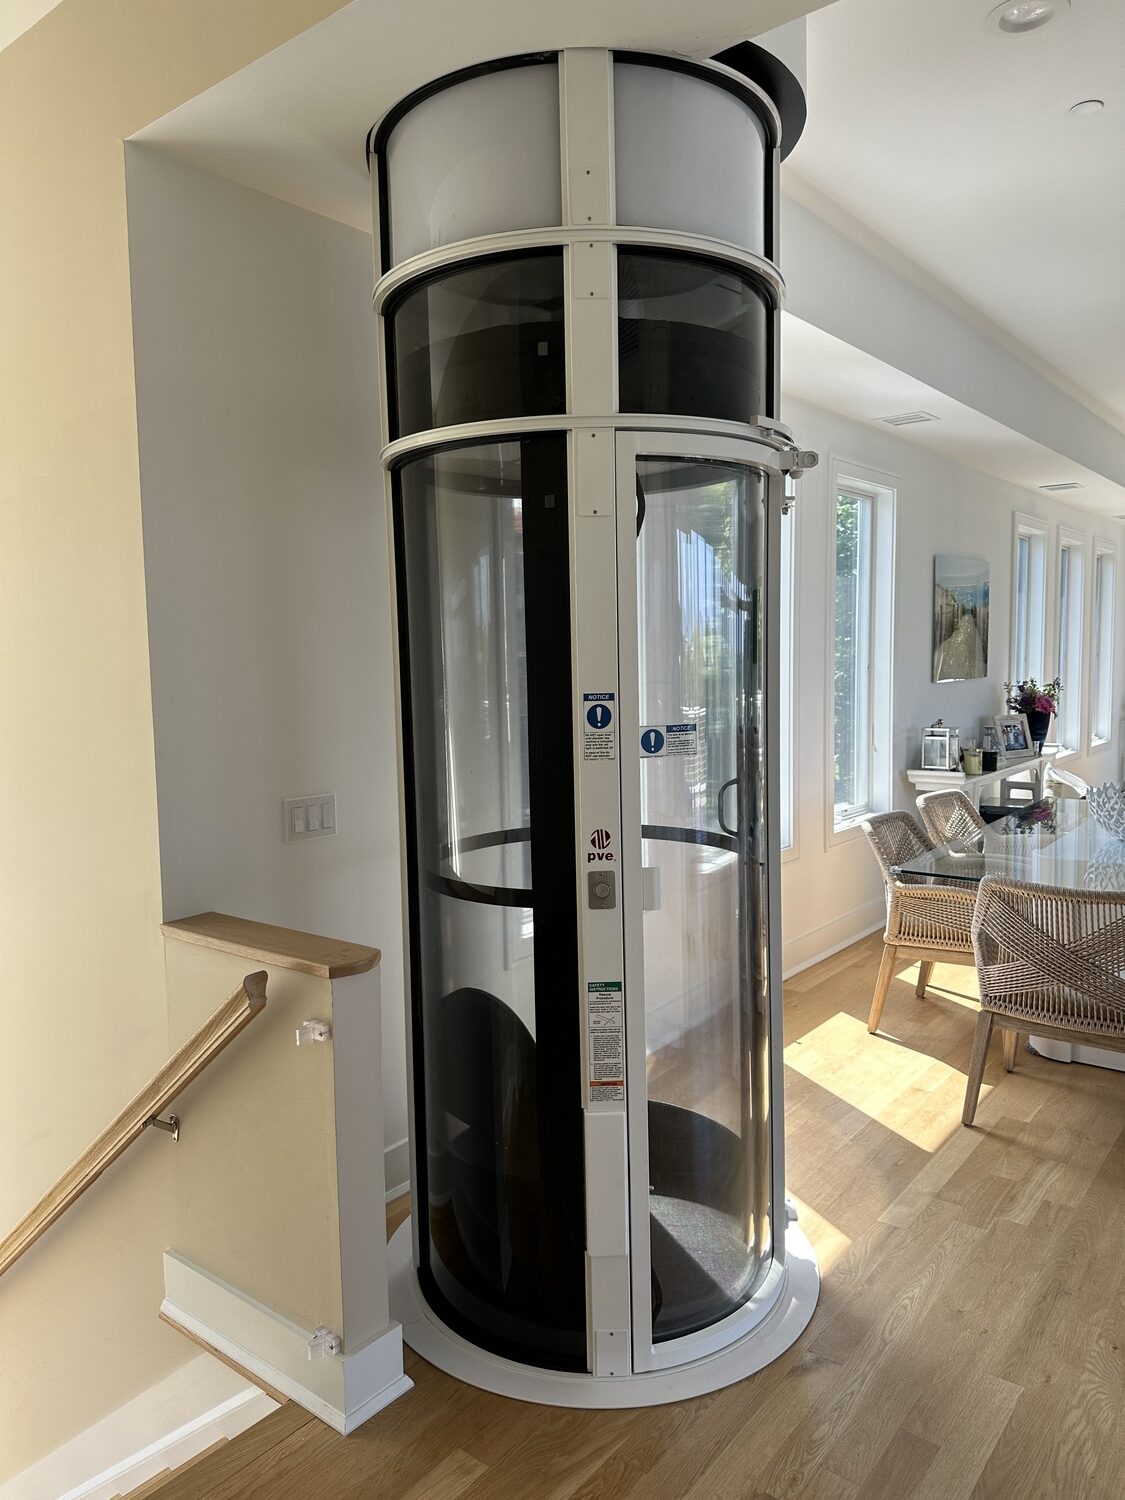 A pneumatic elevator at a home in Westhampton. DAN STARK